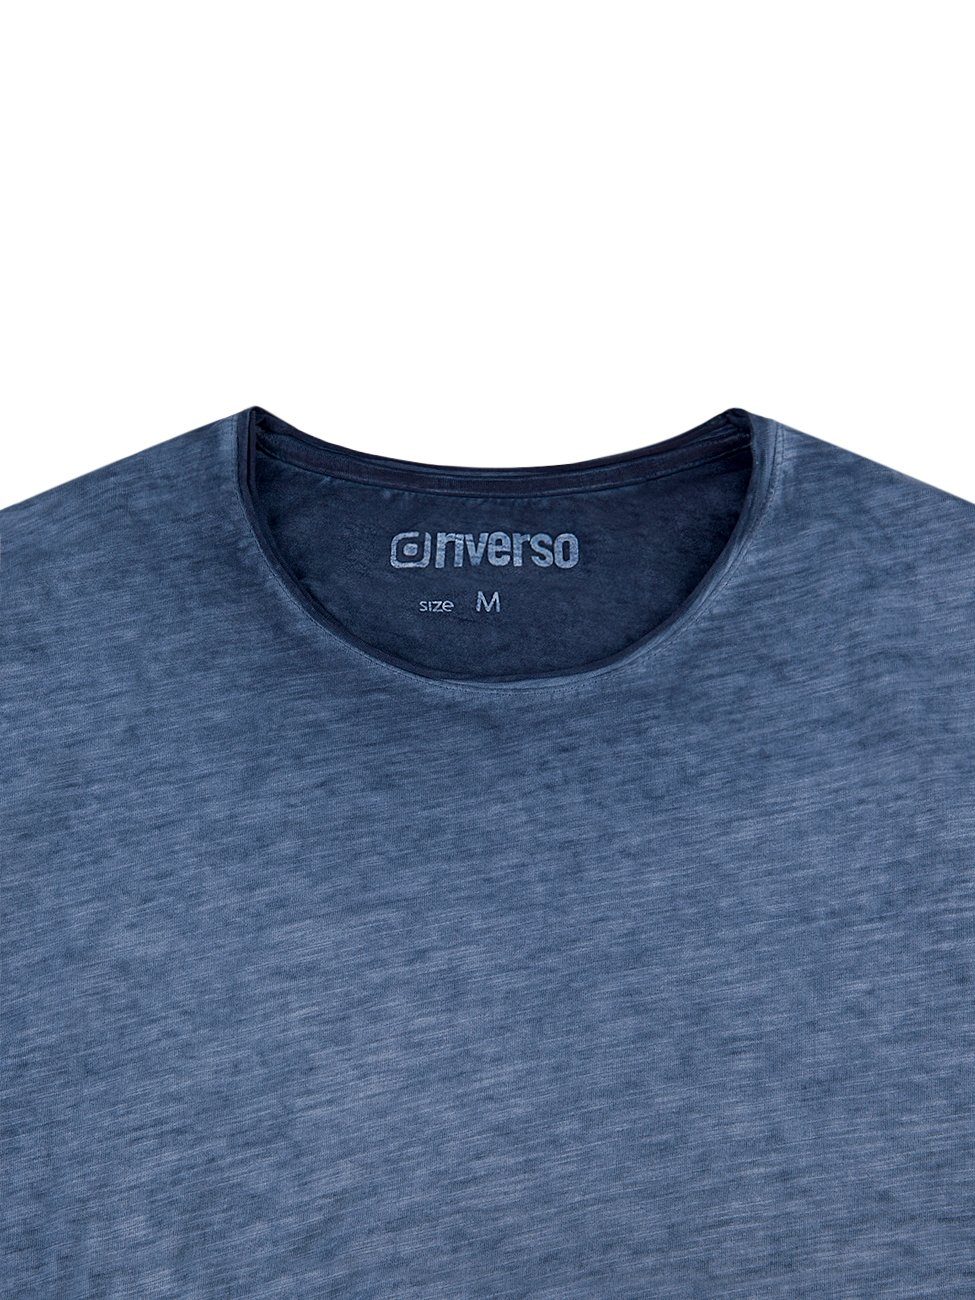 riverso T-Shirt Herren Basic Shirt Rundhalsausschnitt (19400) aus (1-tlg) Dark Fit Regular Tee mit Blue RIVMatteo Shirt Baumwolle 100% Basic Kurzarm